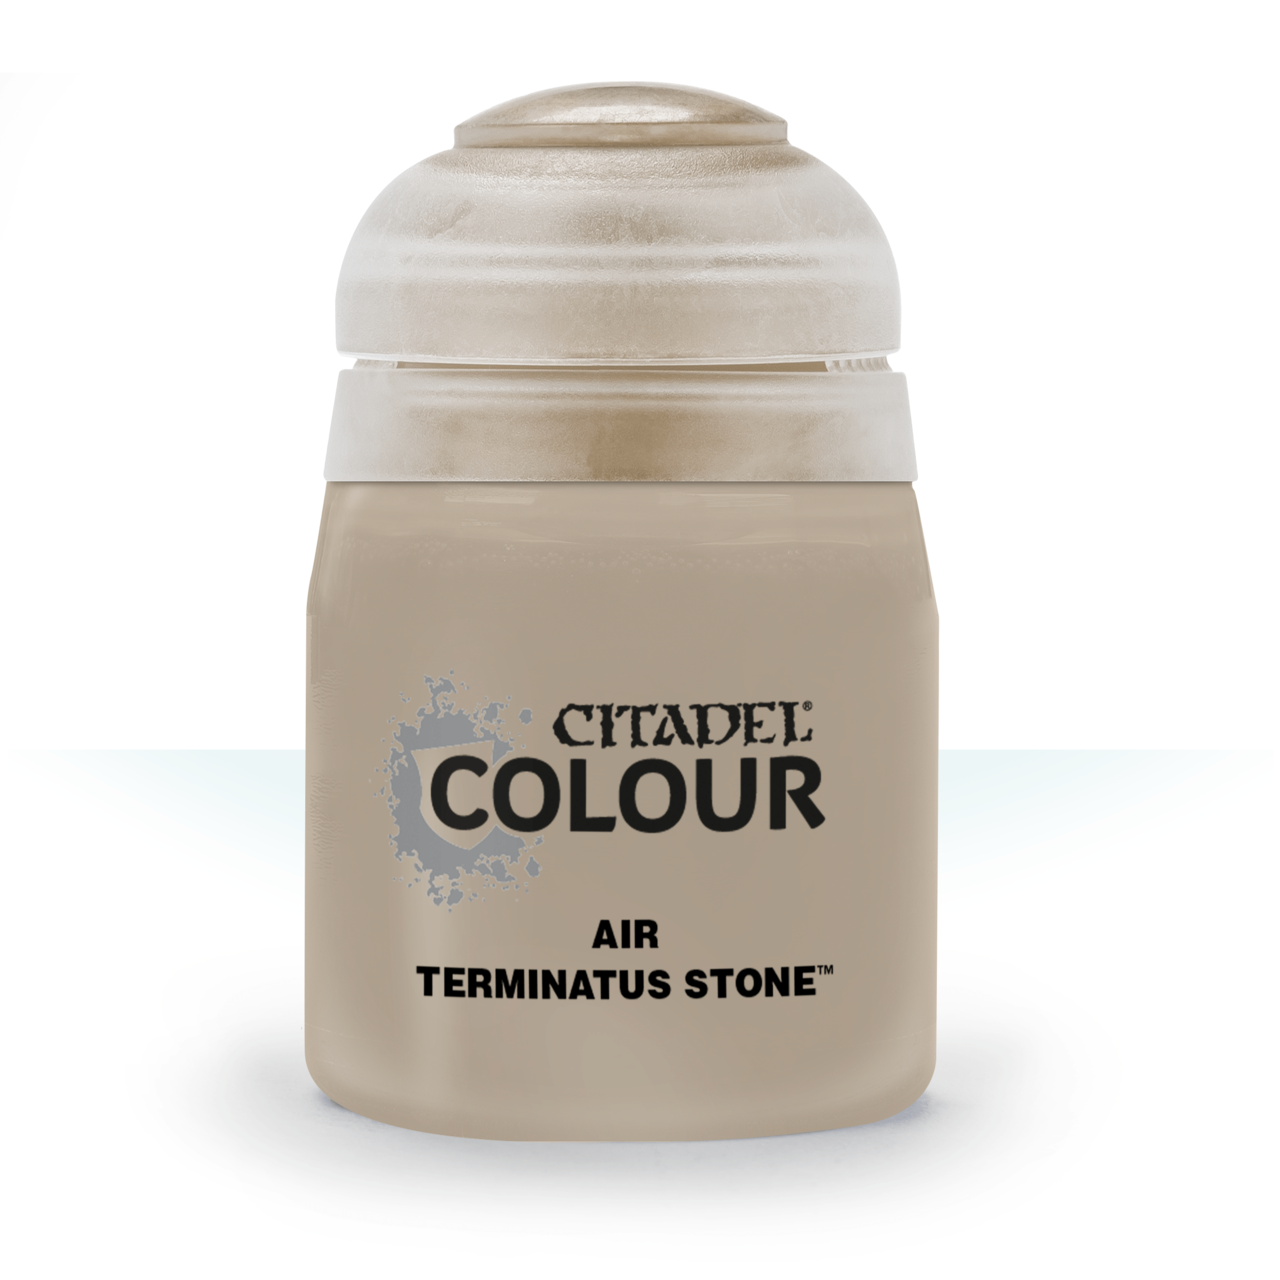 Afbeelding van het spel Terminatus Stone - Air (Citadel)